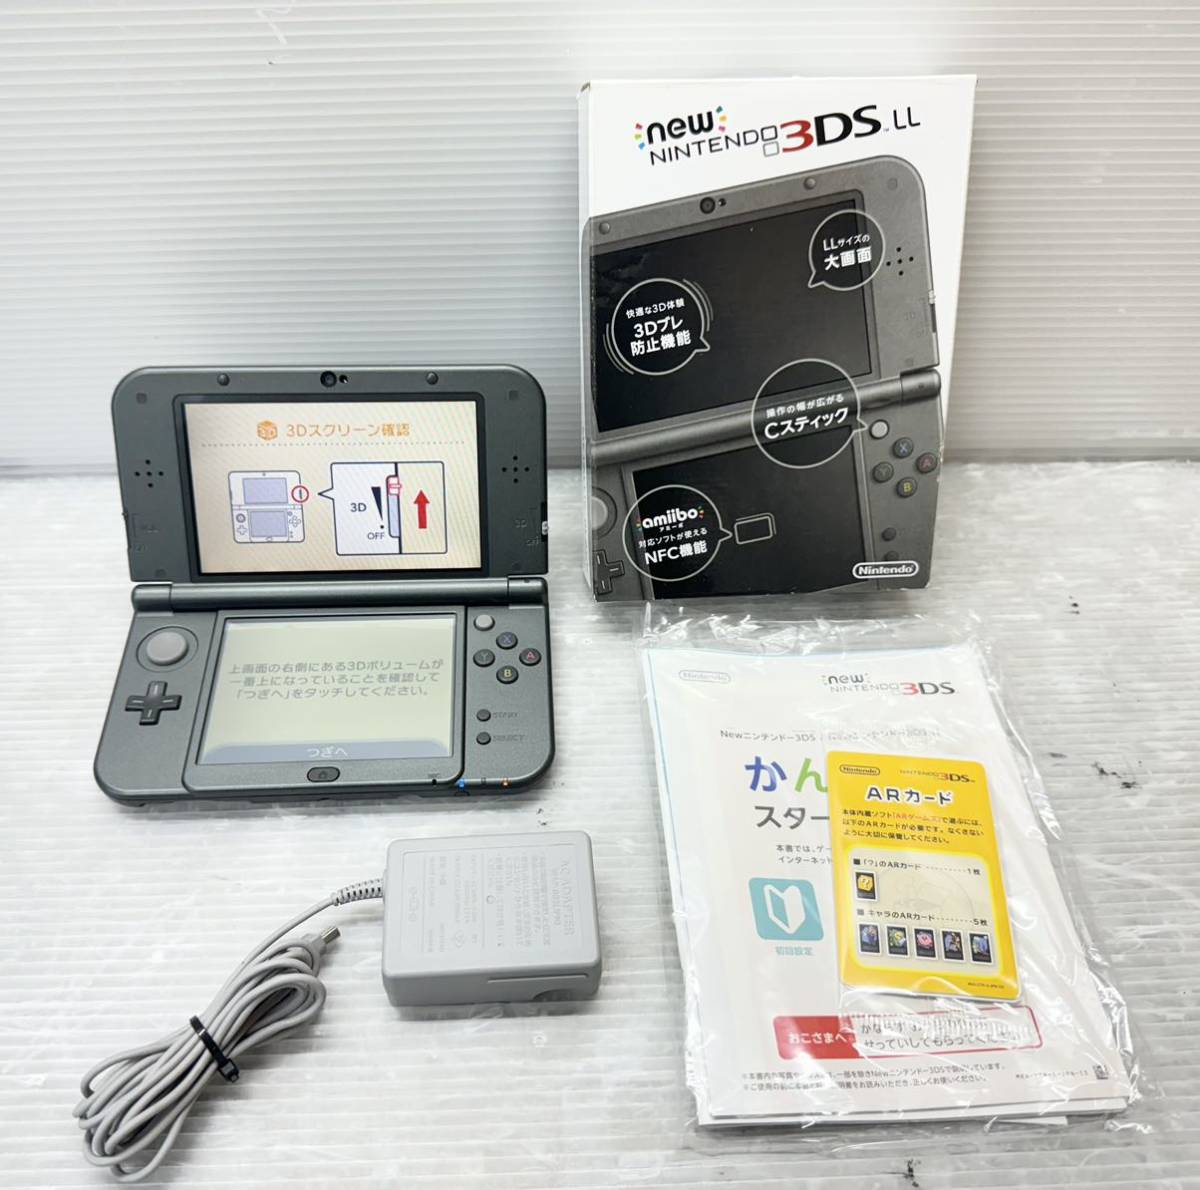 Nintendo Newニンテンドー3DS LL (RED-001(JPN)) メタリックブラック